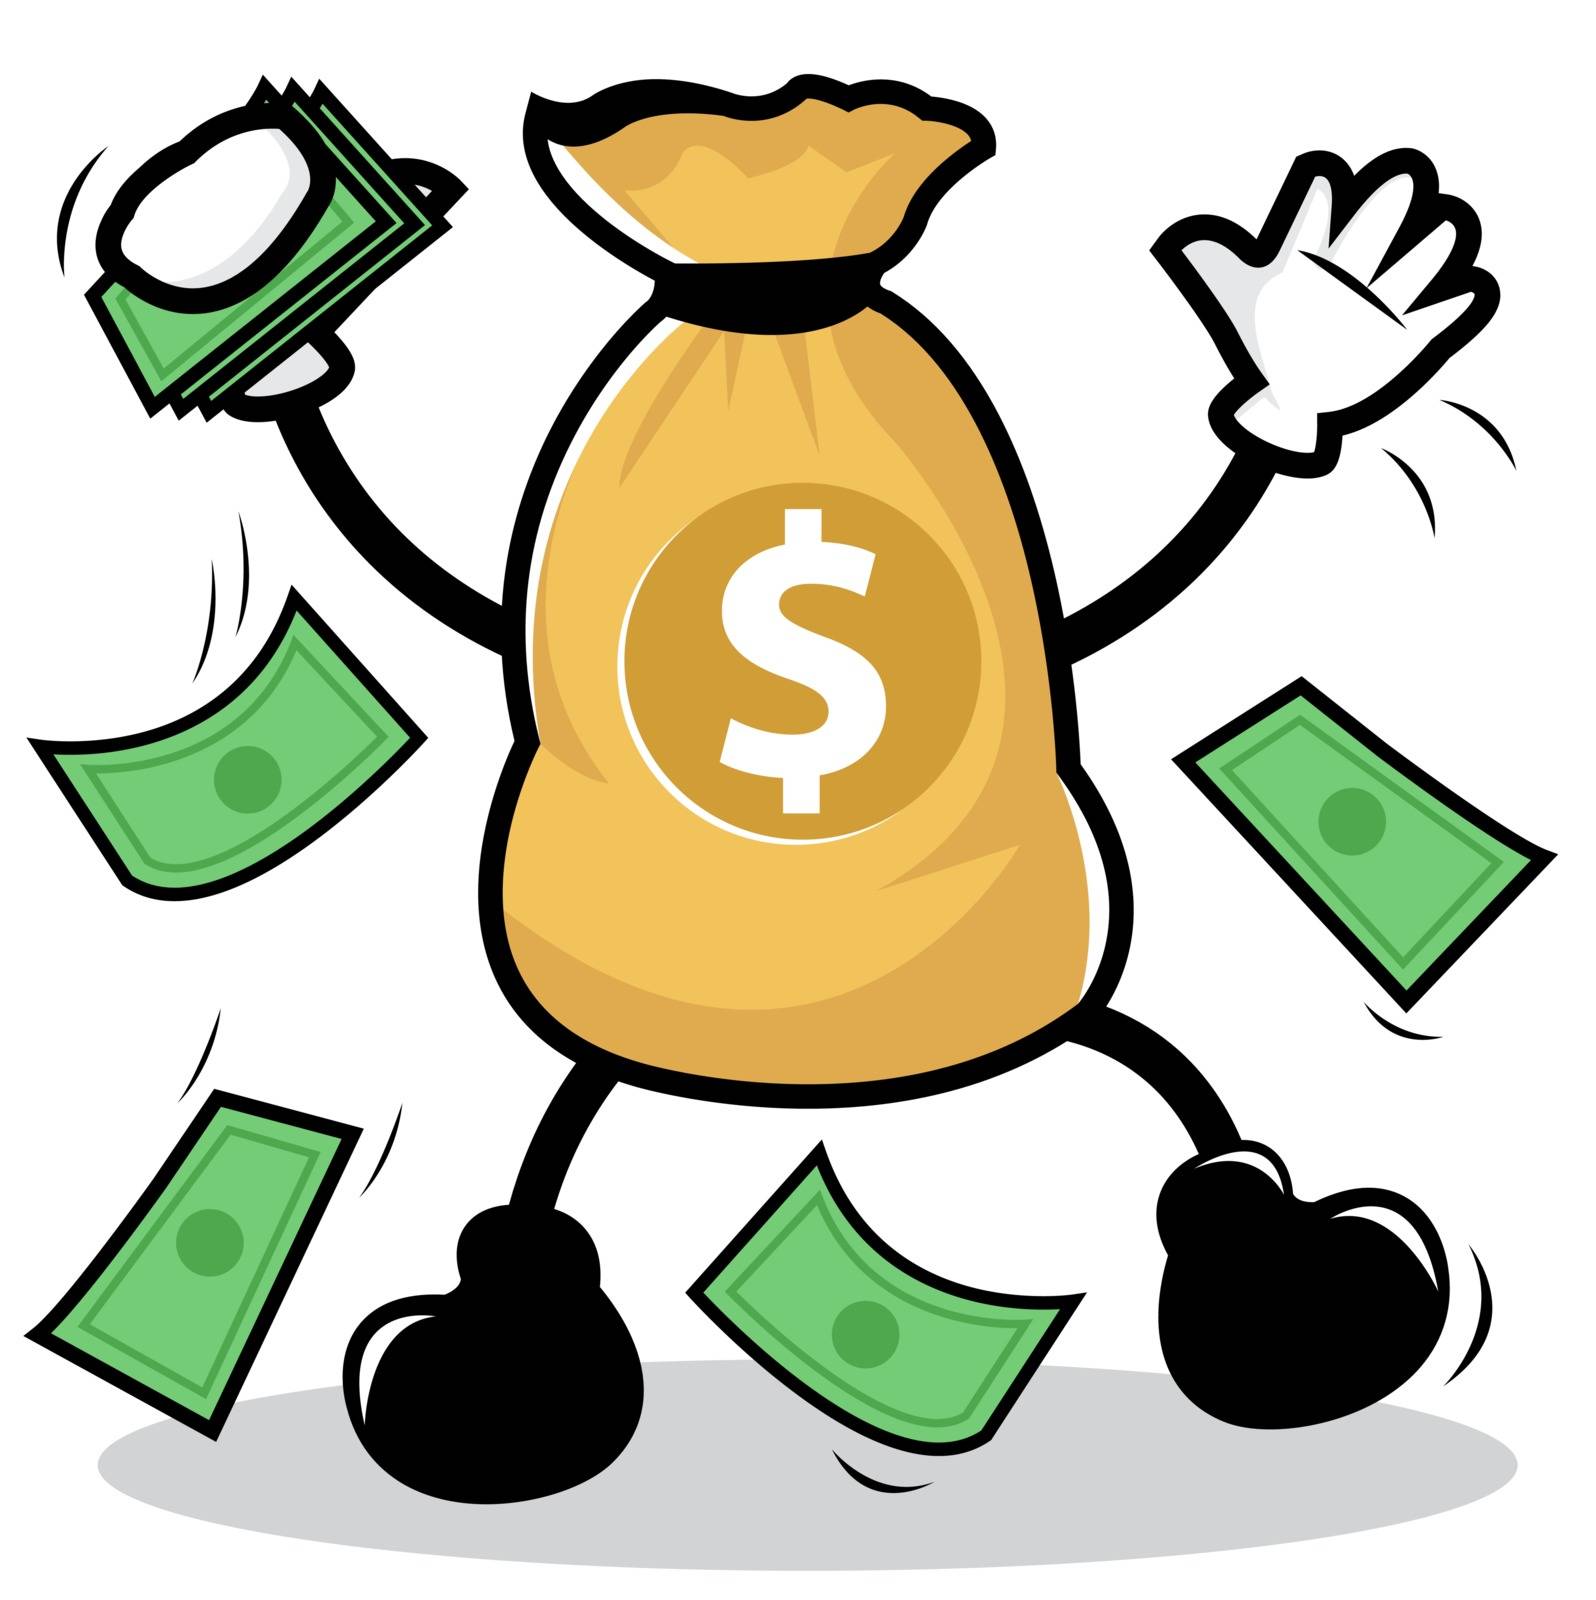 Illustration of Money Bag Character Holding Money on White Background